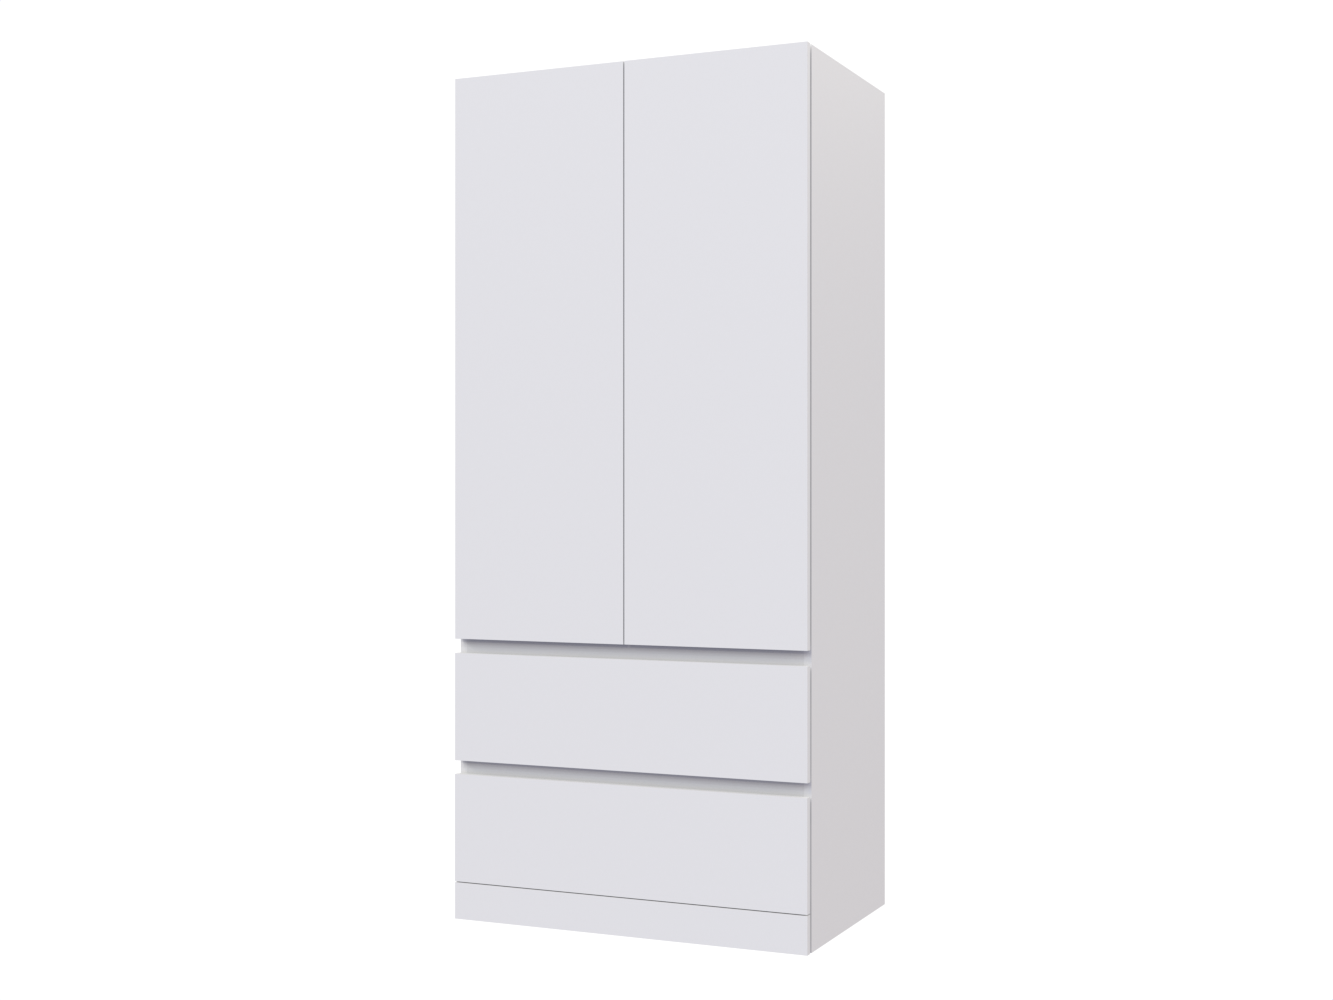 Распашной шкаф Мальм 313 white ИКЕА (IKEA) изображение товара